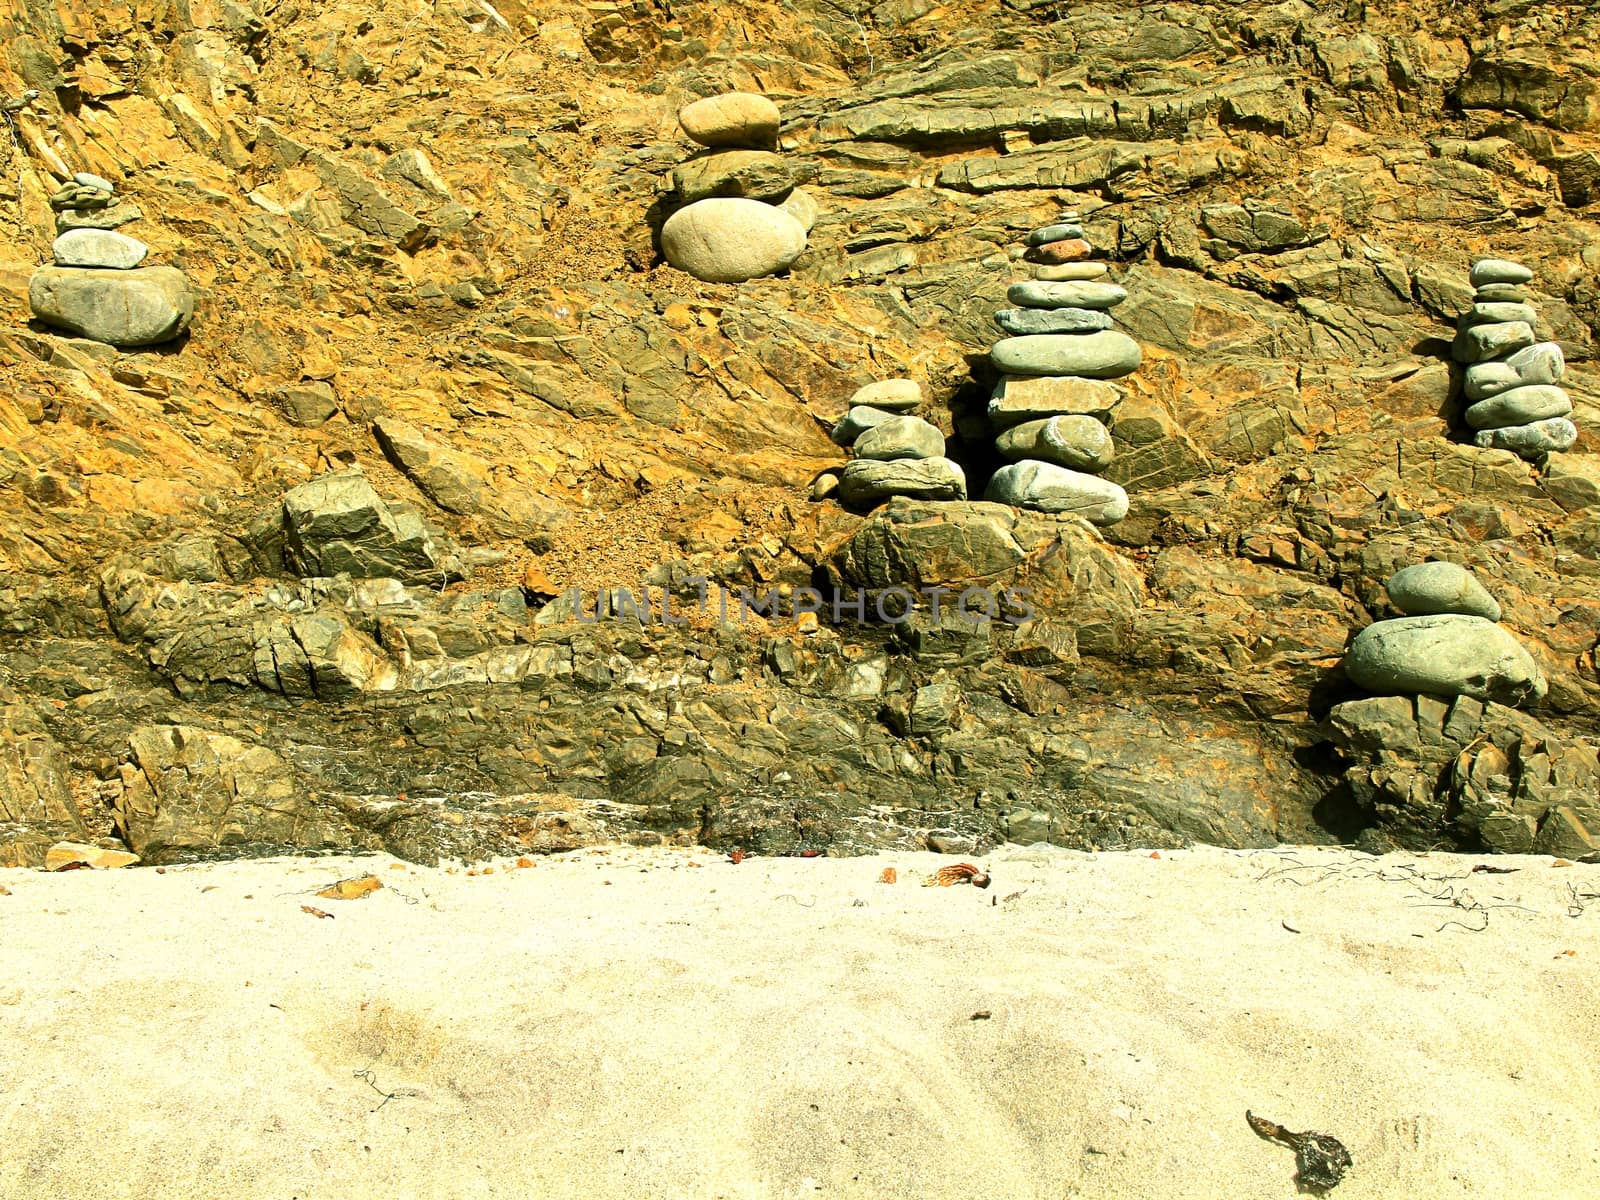 Stone balancing on the beach.